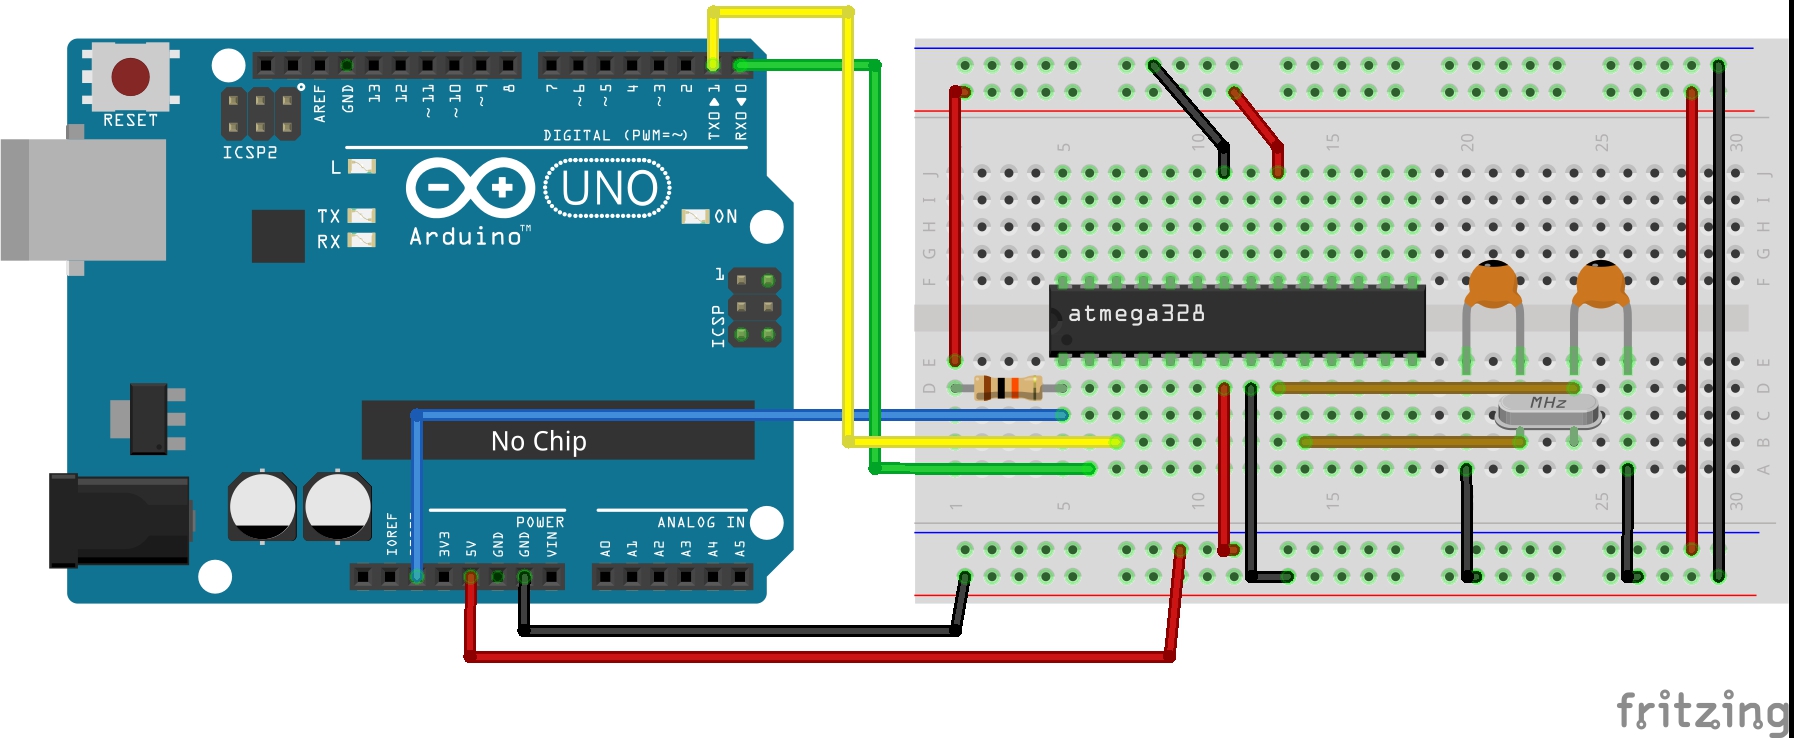 DIYTechStudio: How to upload sketch to Atmega328p using Arduino UNO on